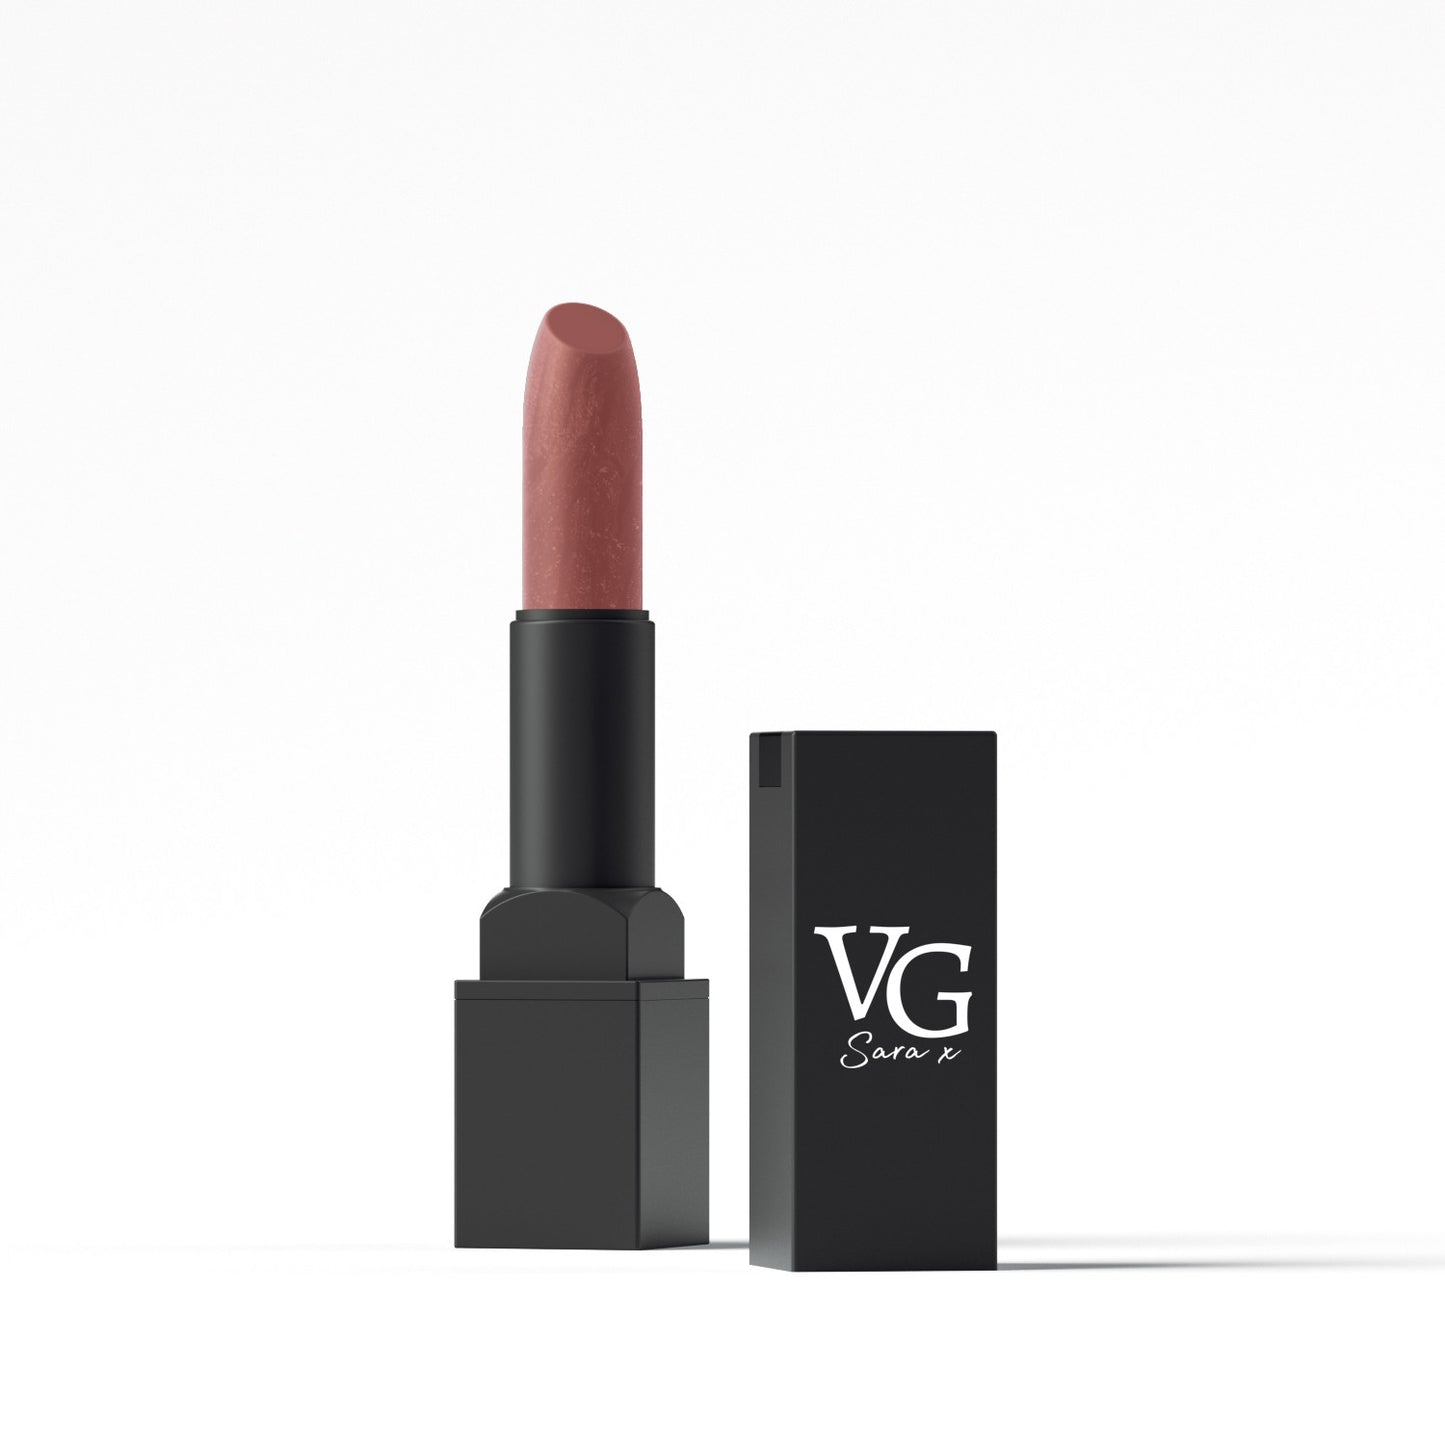 VG branded natural long lasting lipstick with long-lasting formula